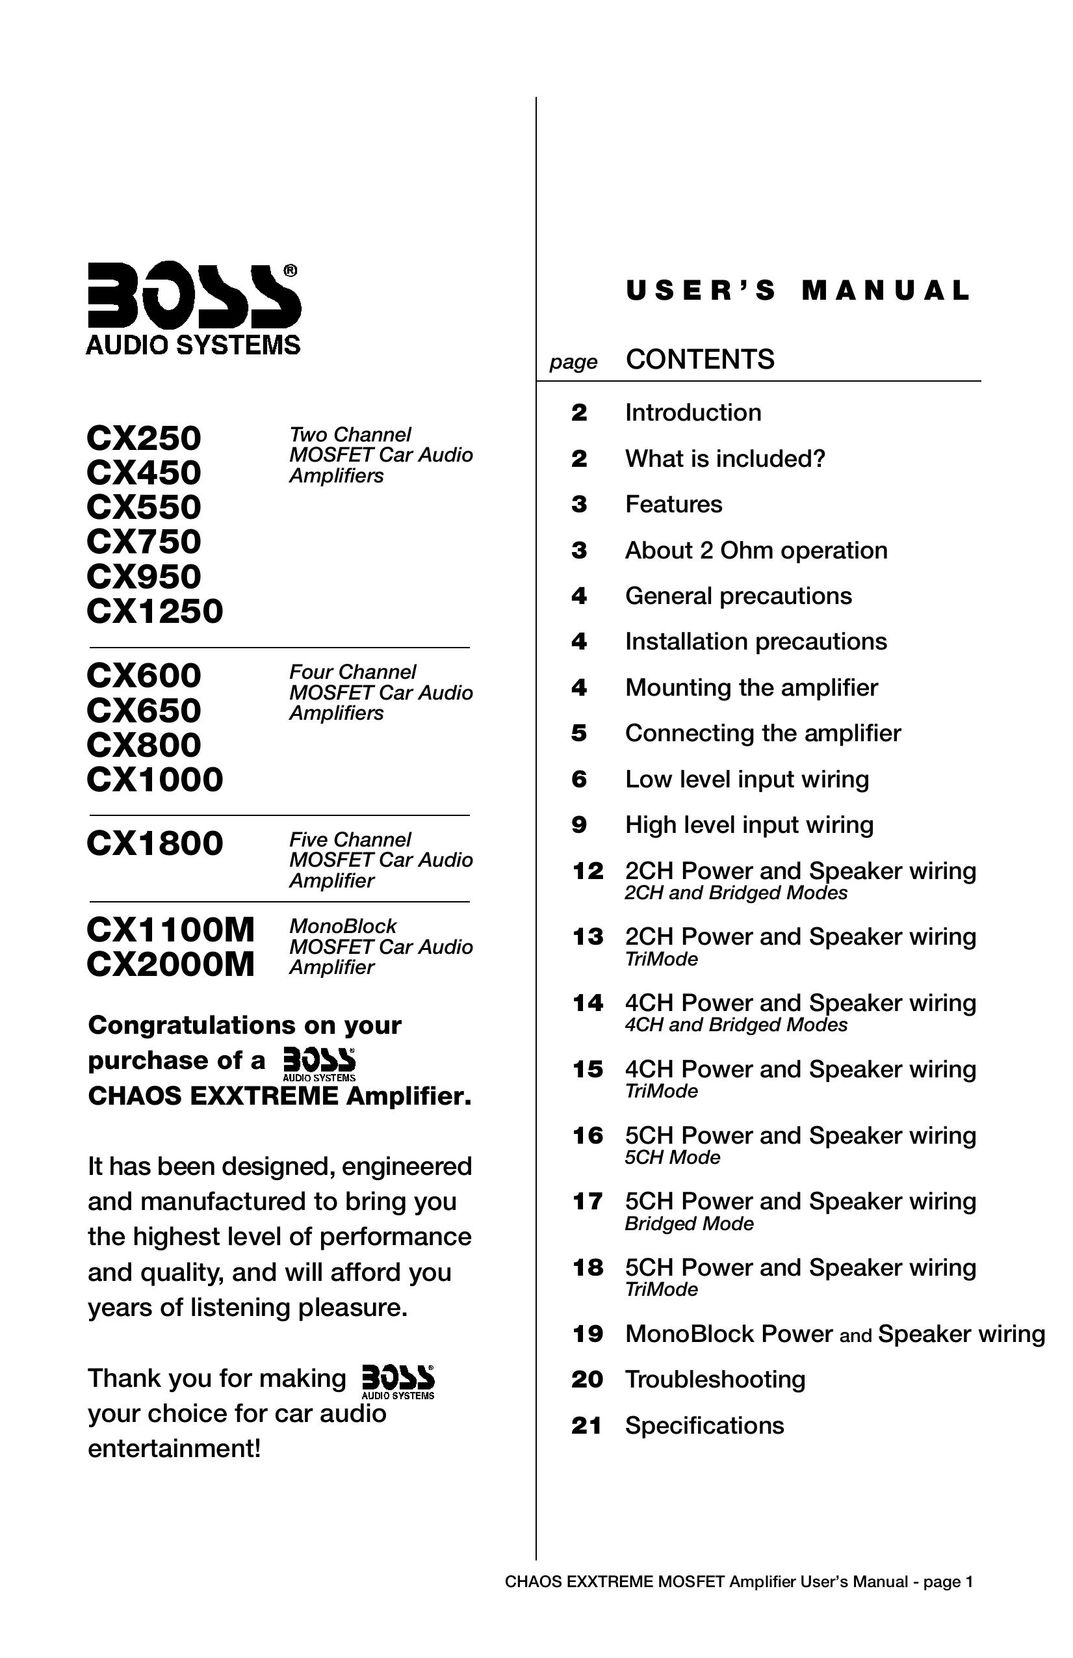 Boss Audio Systems CX2000M Car Amplifier User Manual